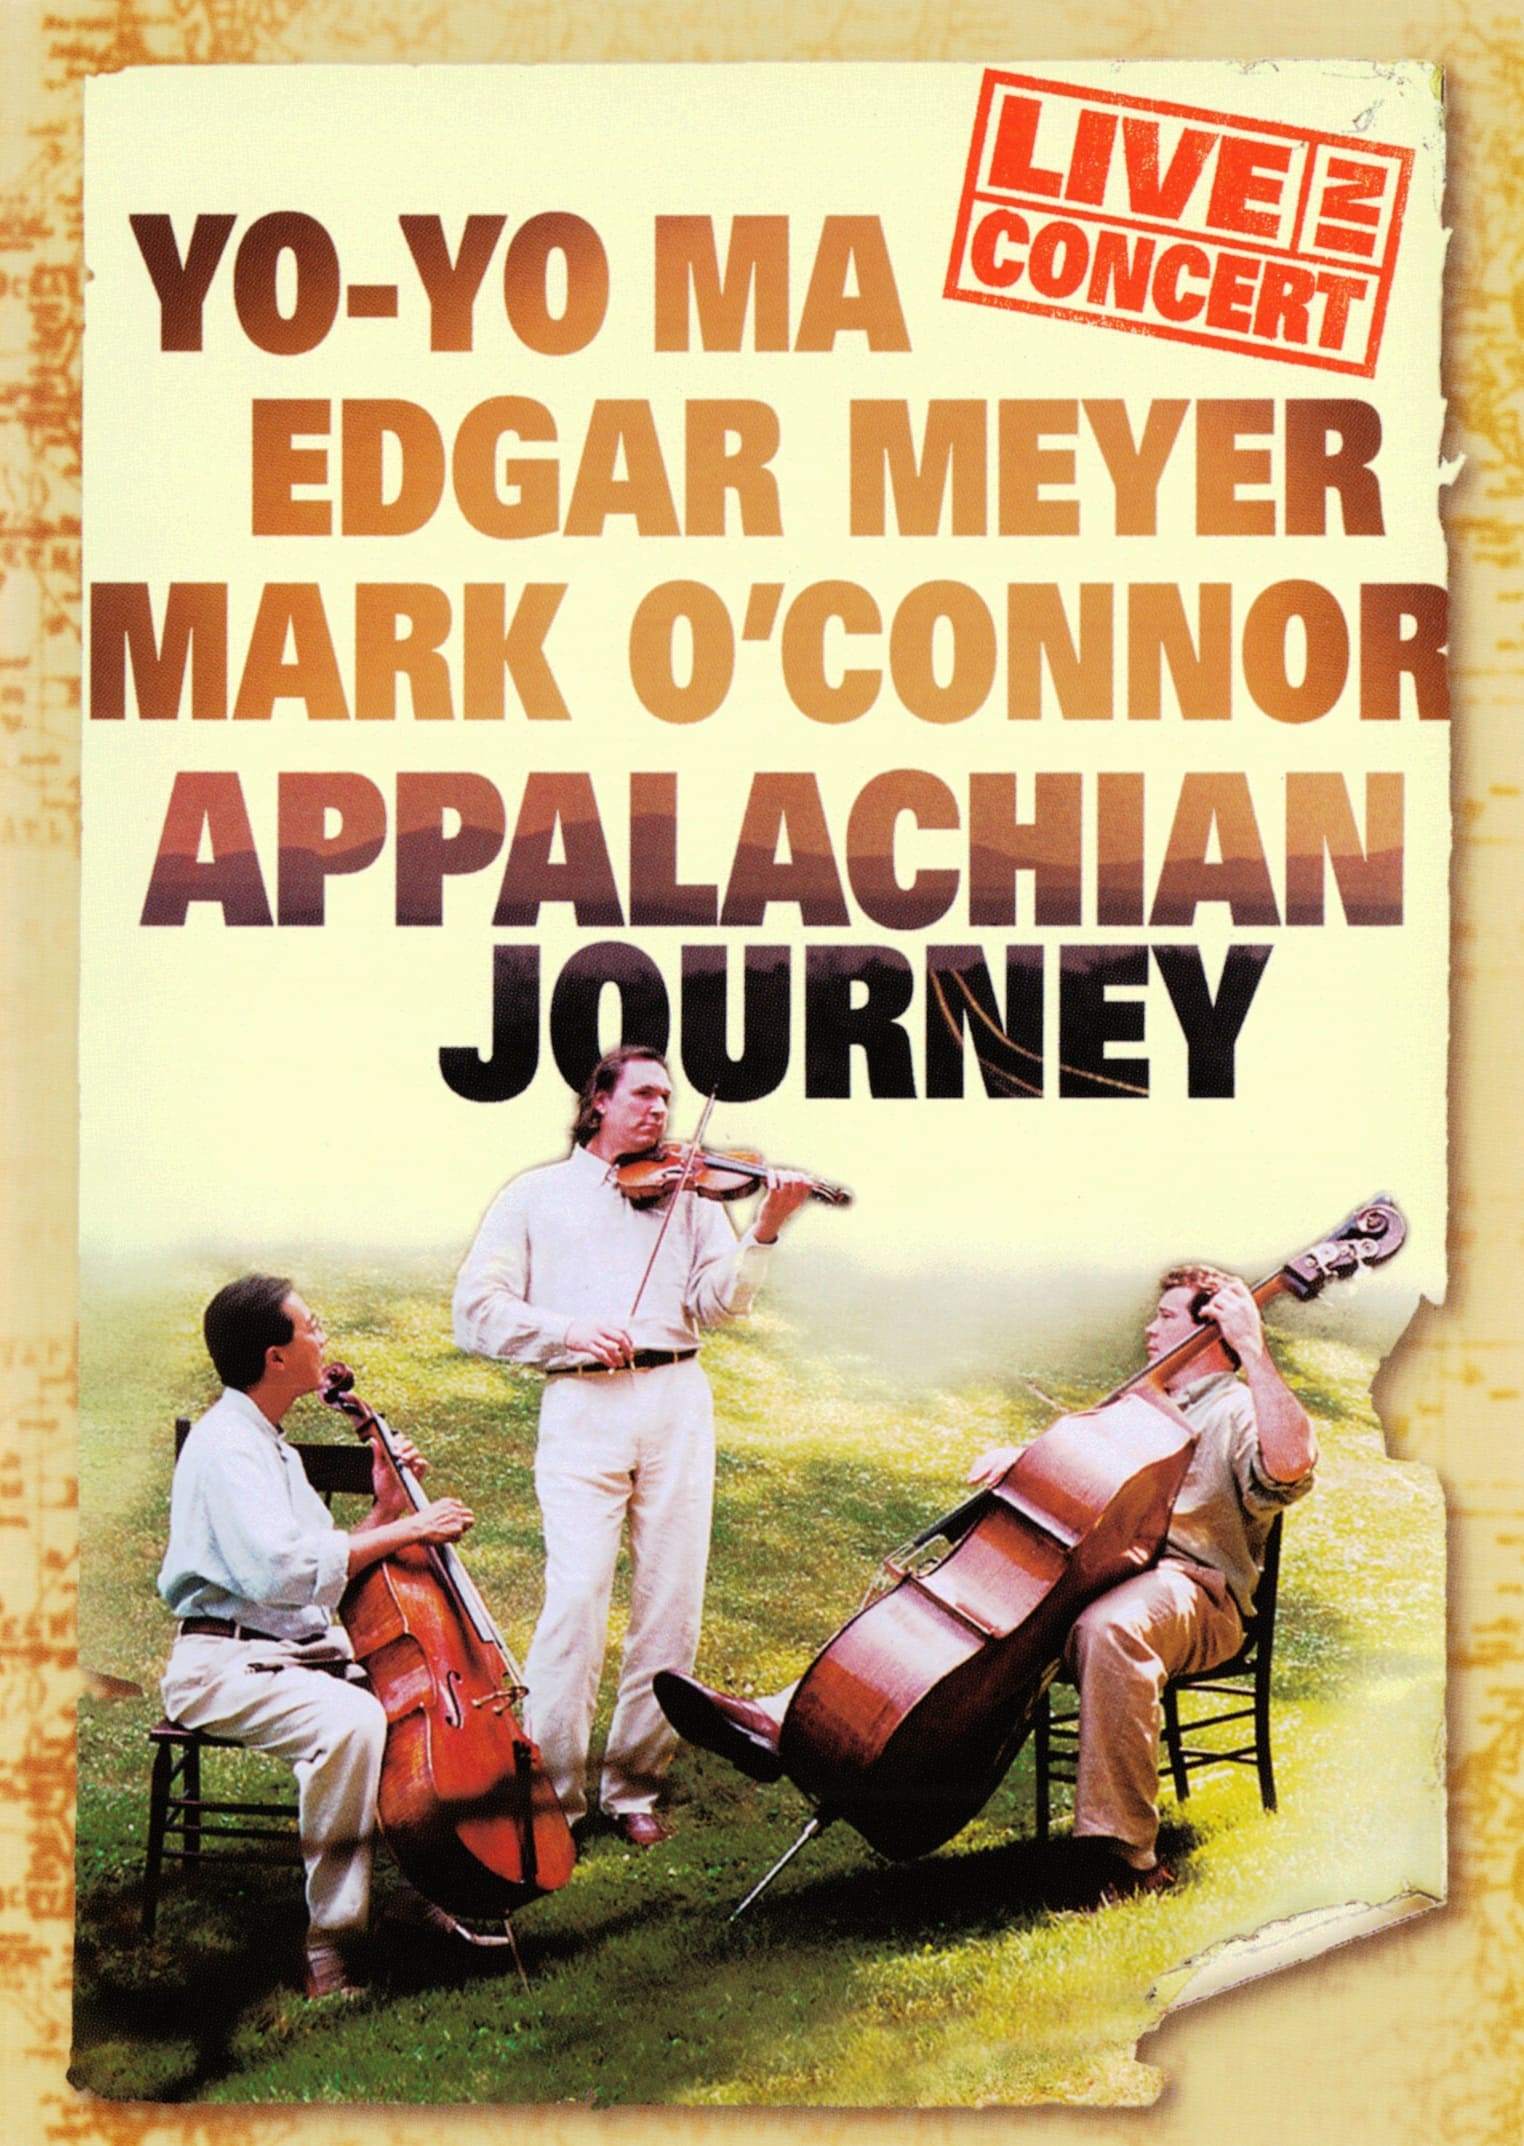 Appalachian Journey Live In Concert